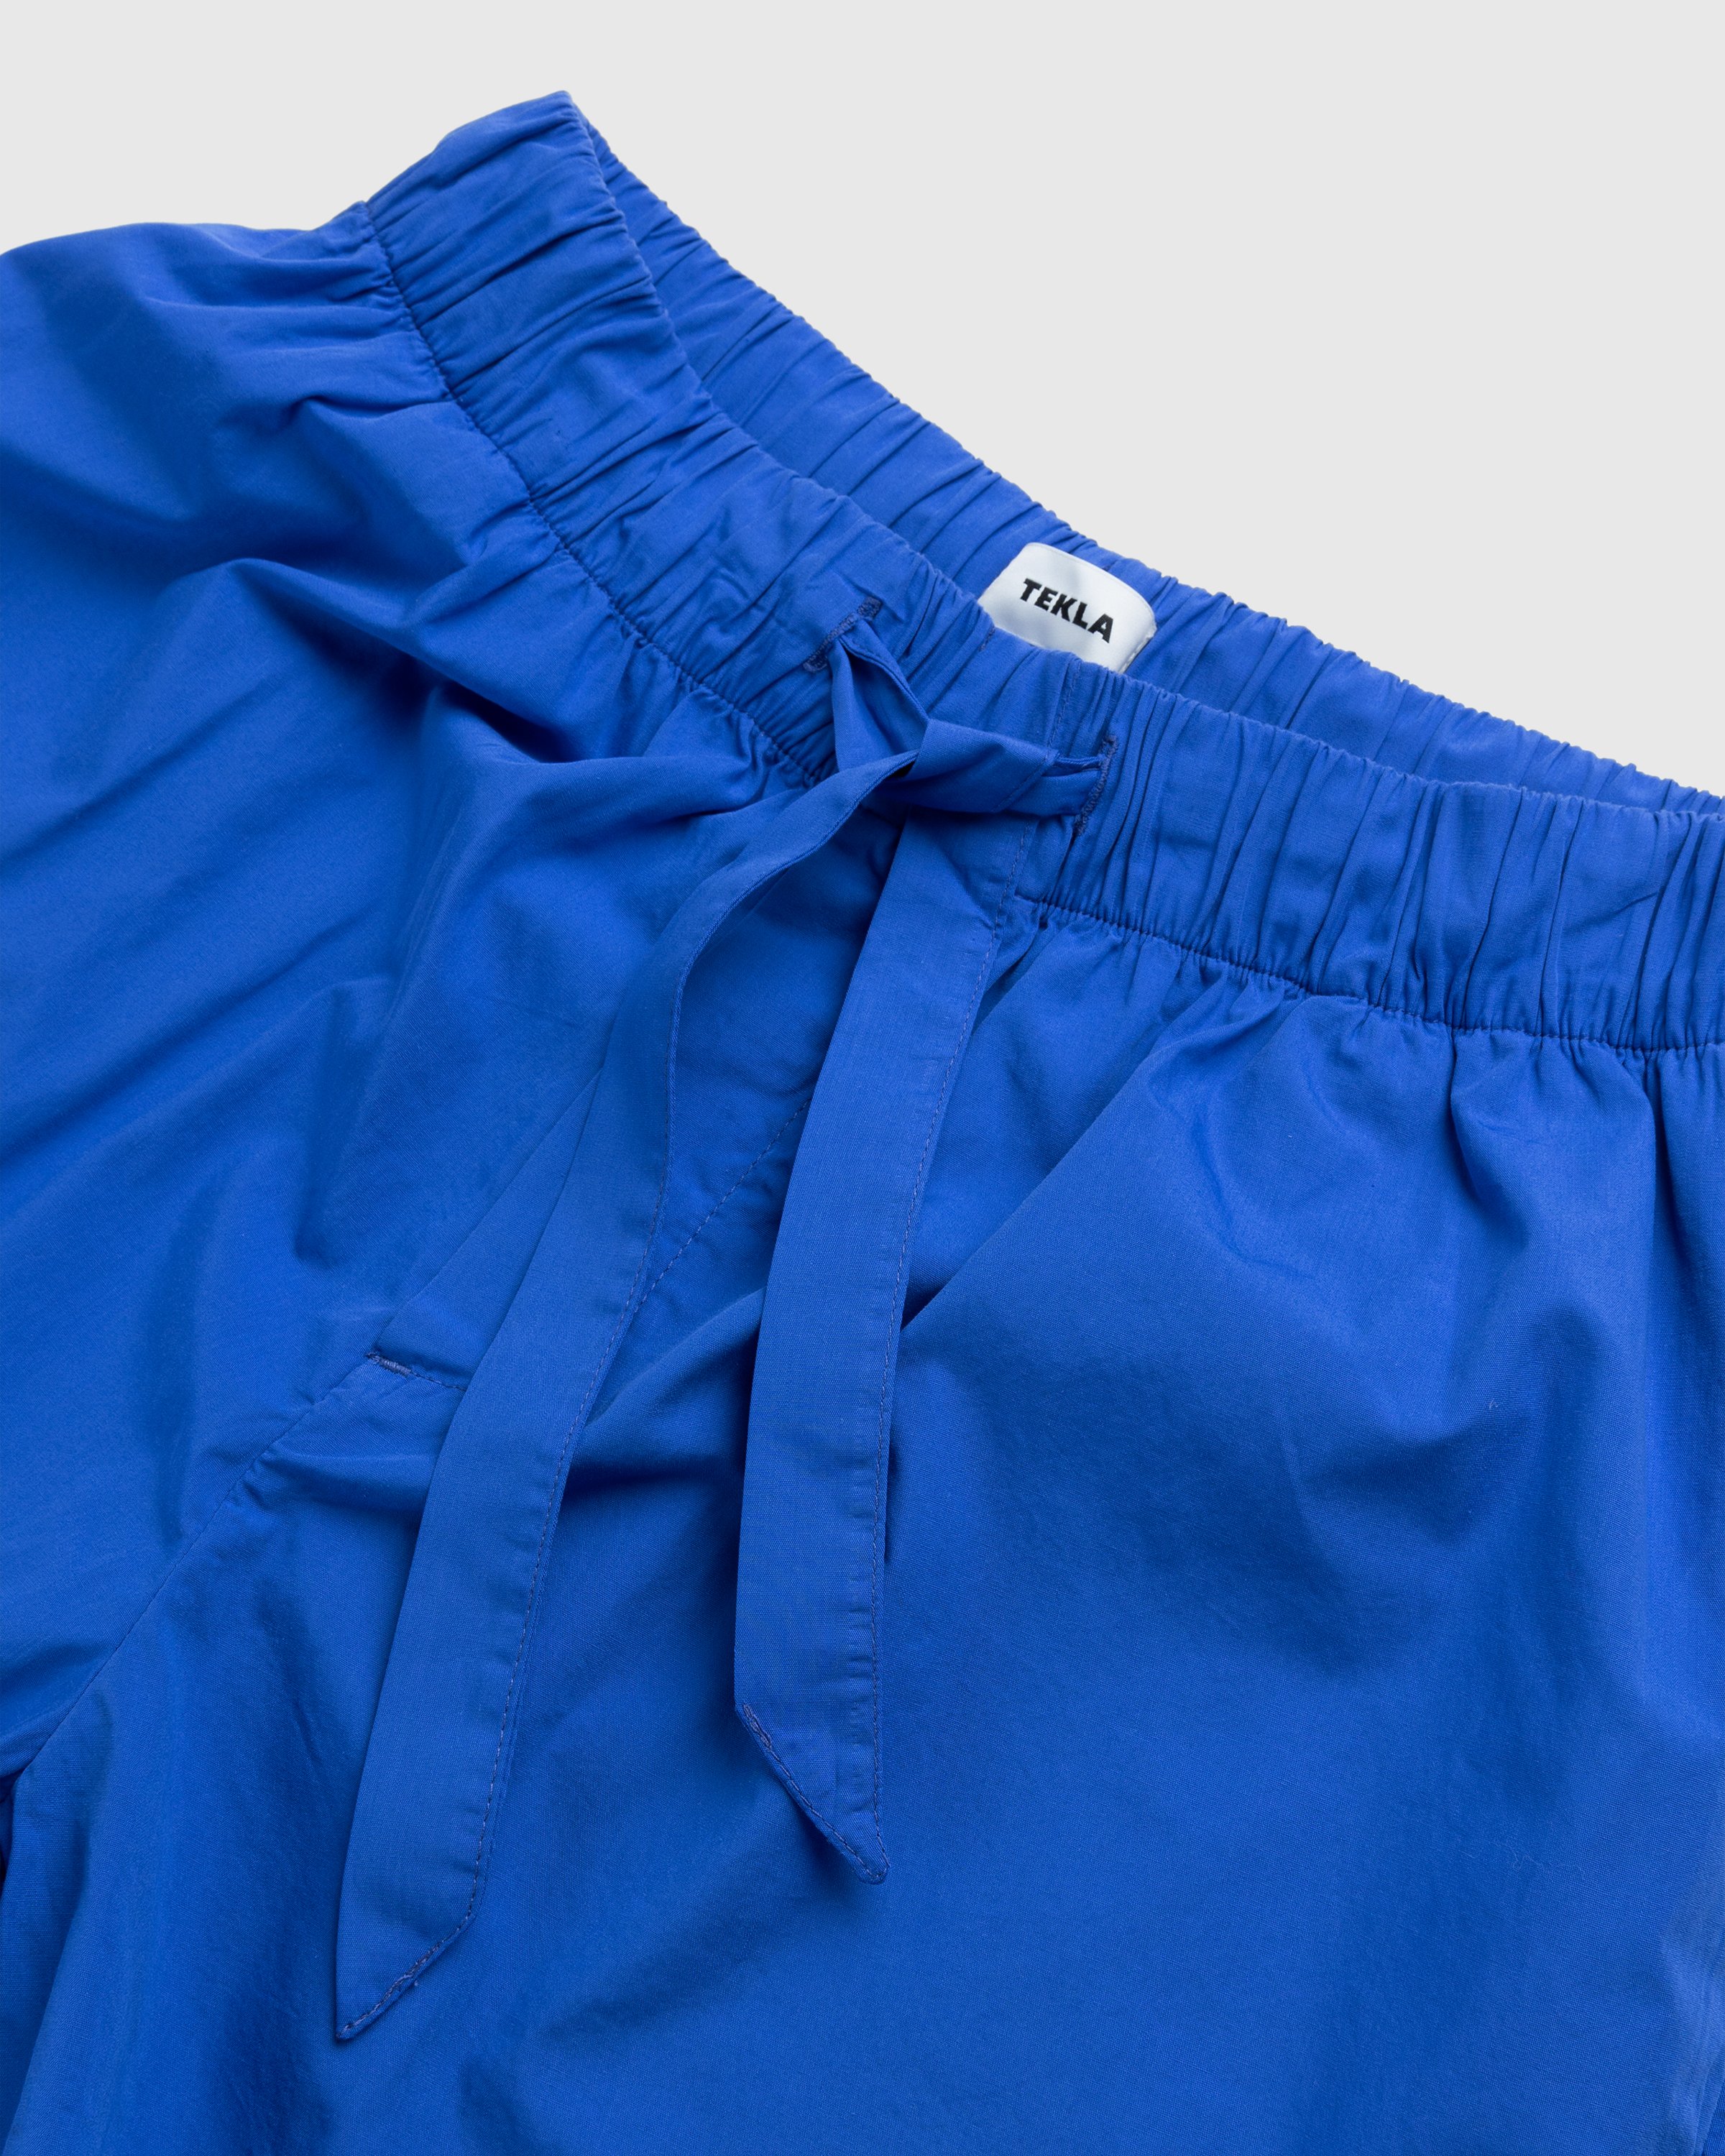 Tekla - Cotton Poplin Pyjamas Shorts Royal Blue - Clothing - Blue - Image 3